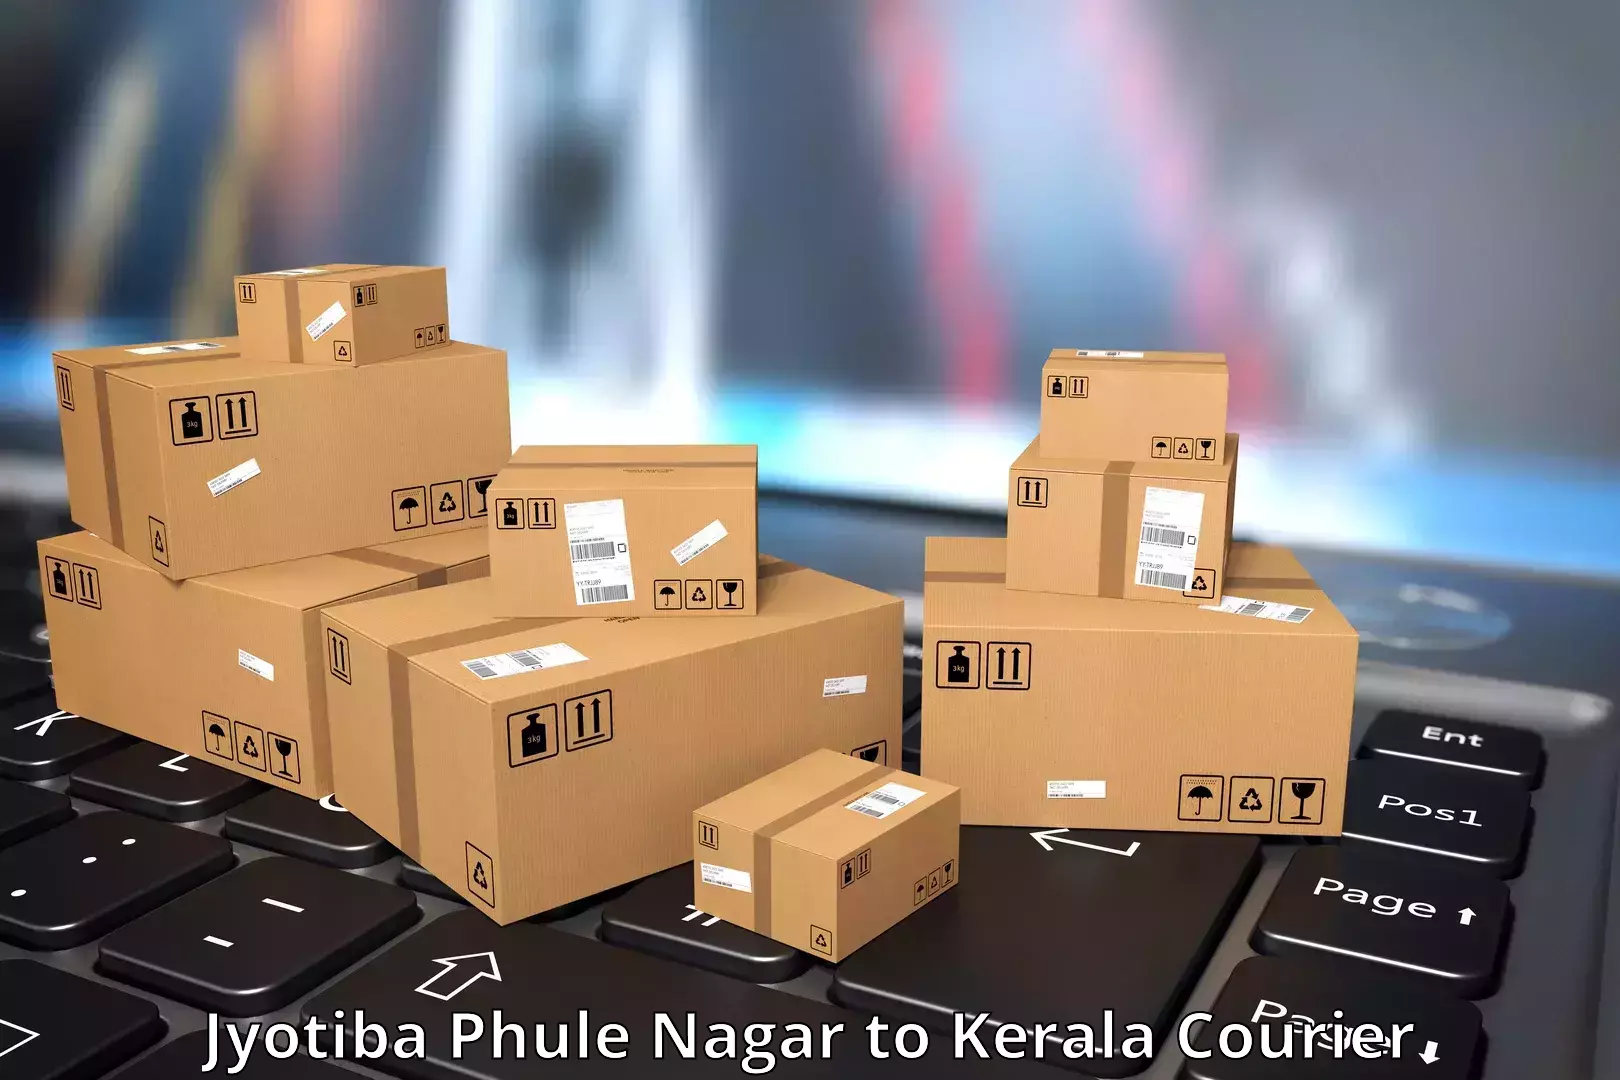 User-friendly delivery service Jyotiba Phule Nagar to Kochi